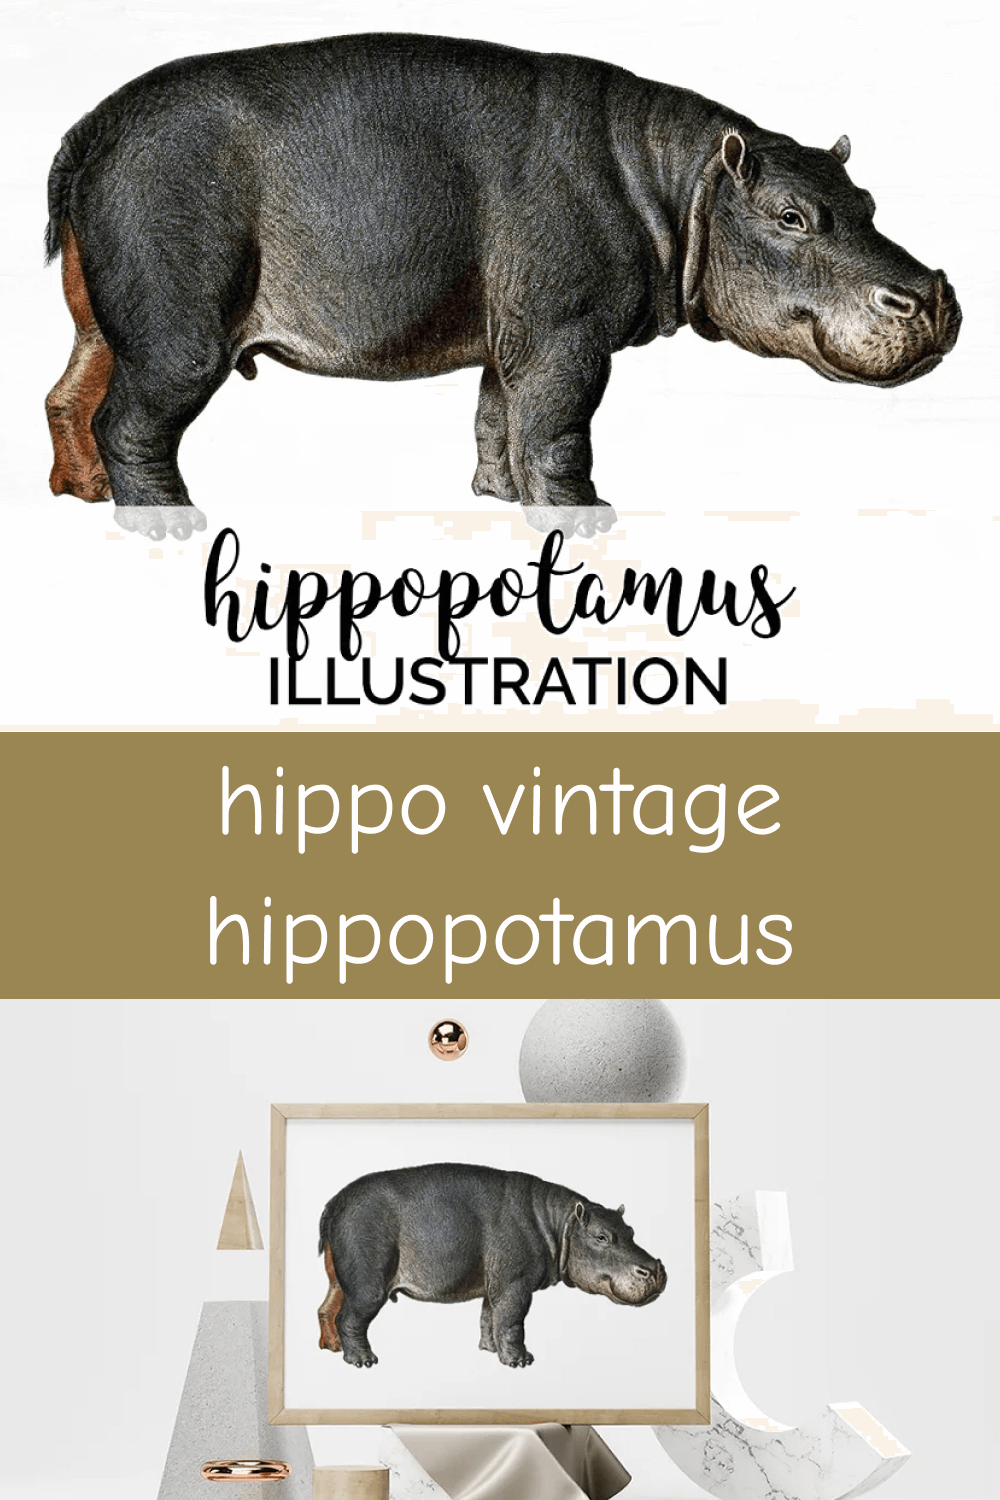 Hippo vintage hippopotamus.